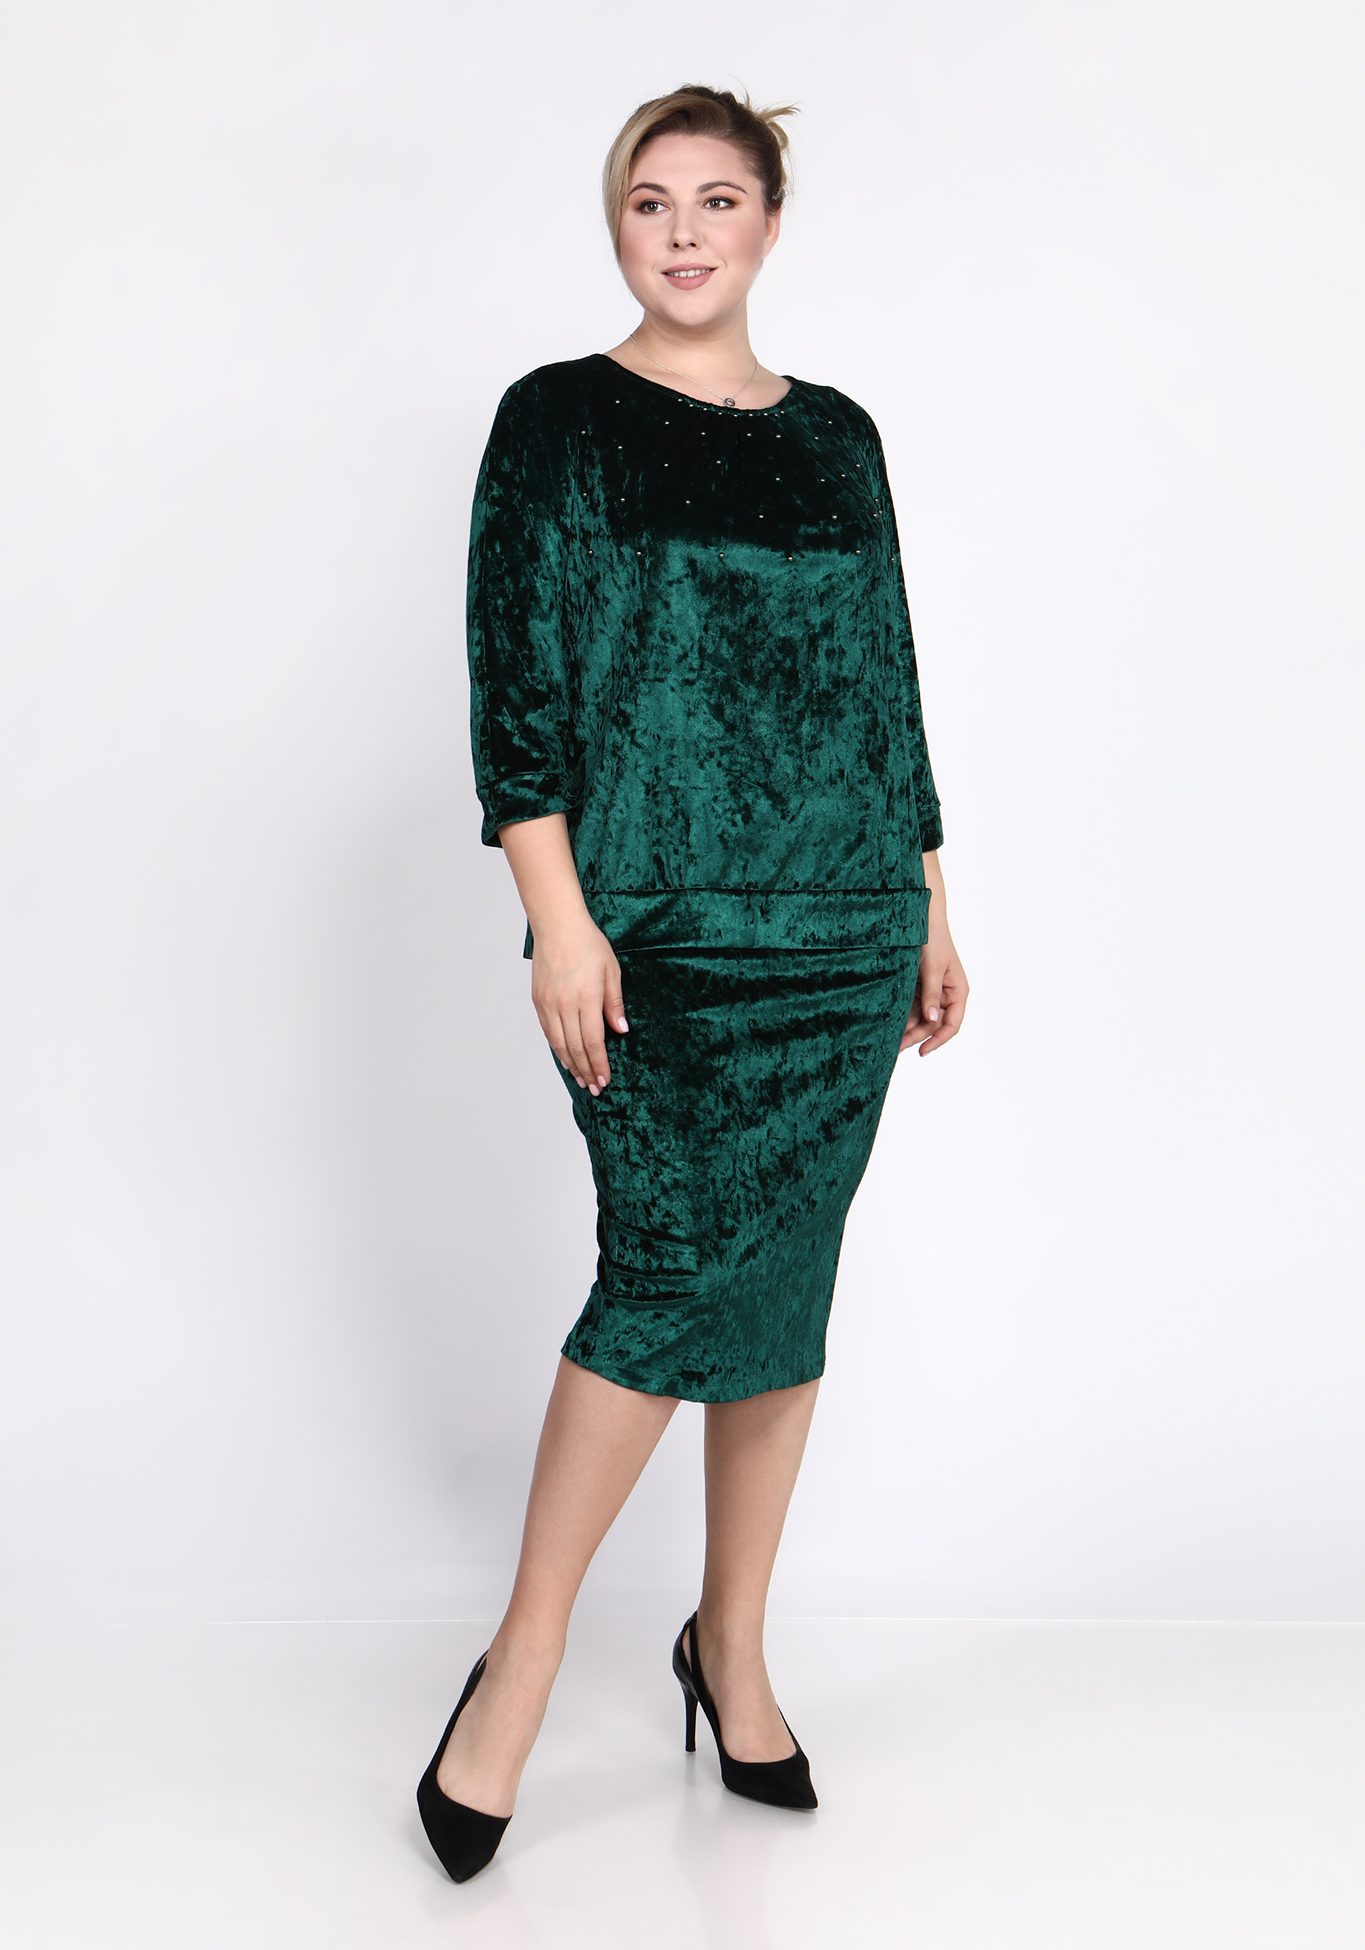 Костюм с юбкой из велюра Bianka Modeno, размер 50, цвет зелёный фантазийная - фото 2